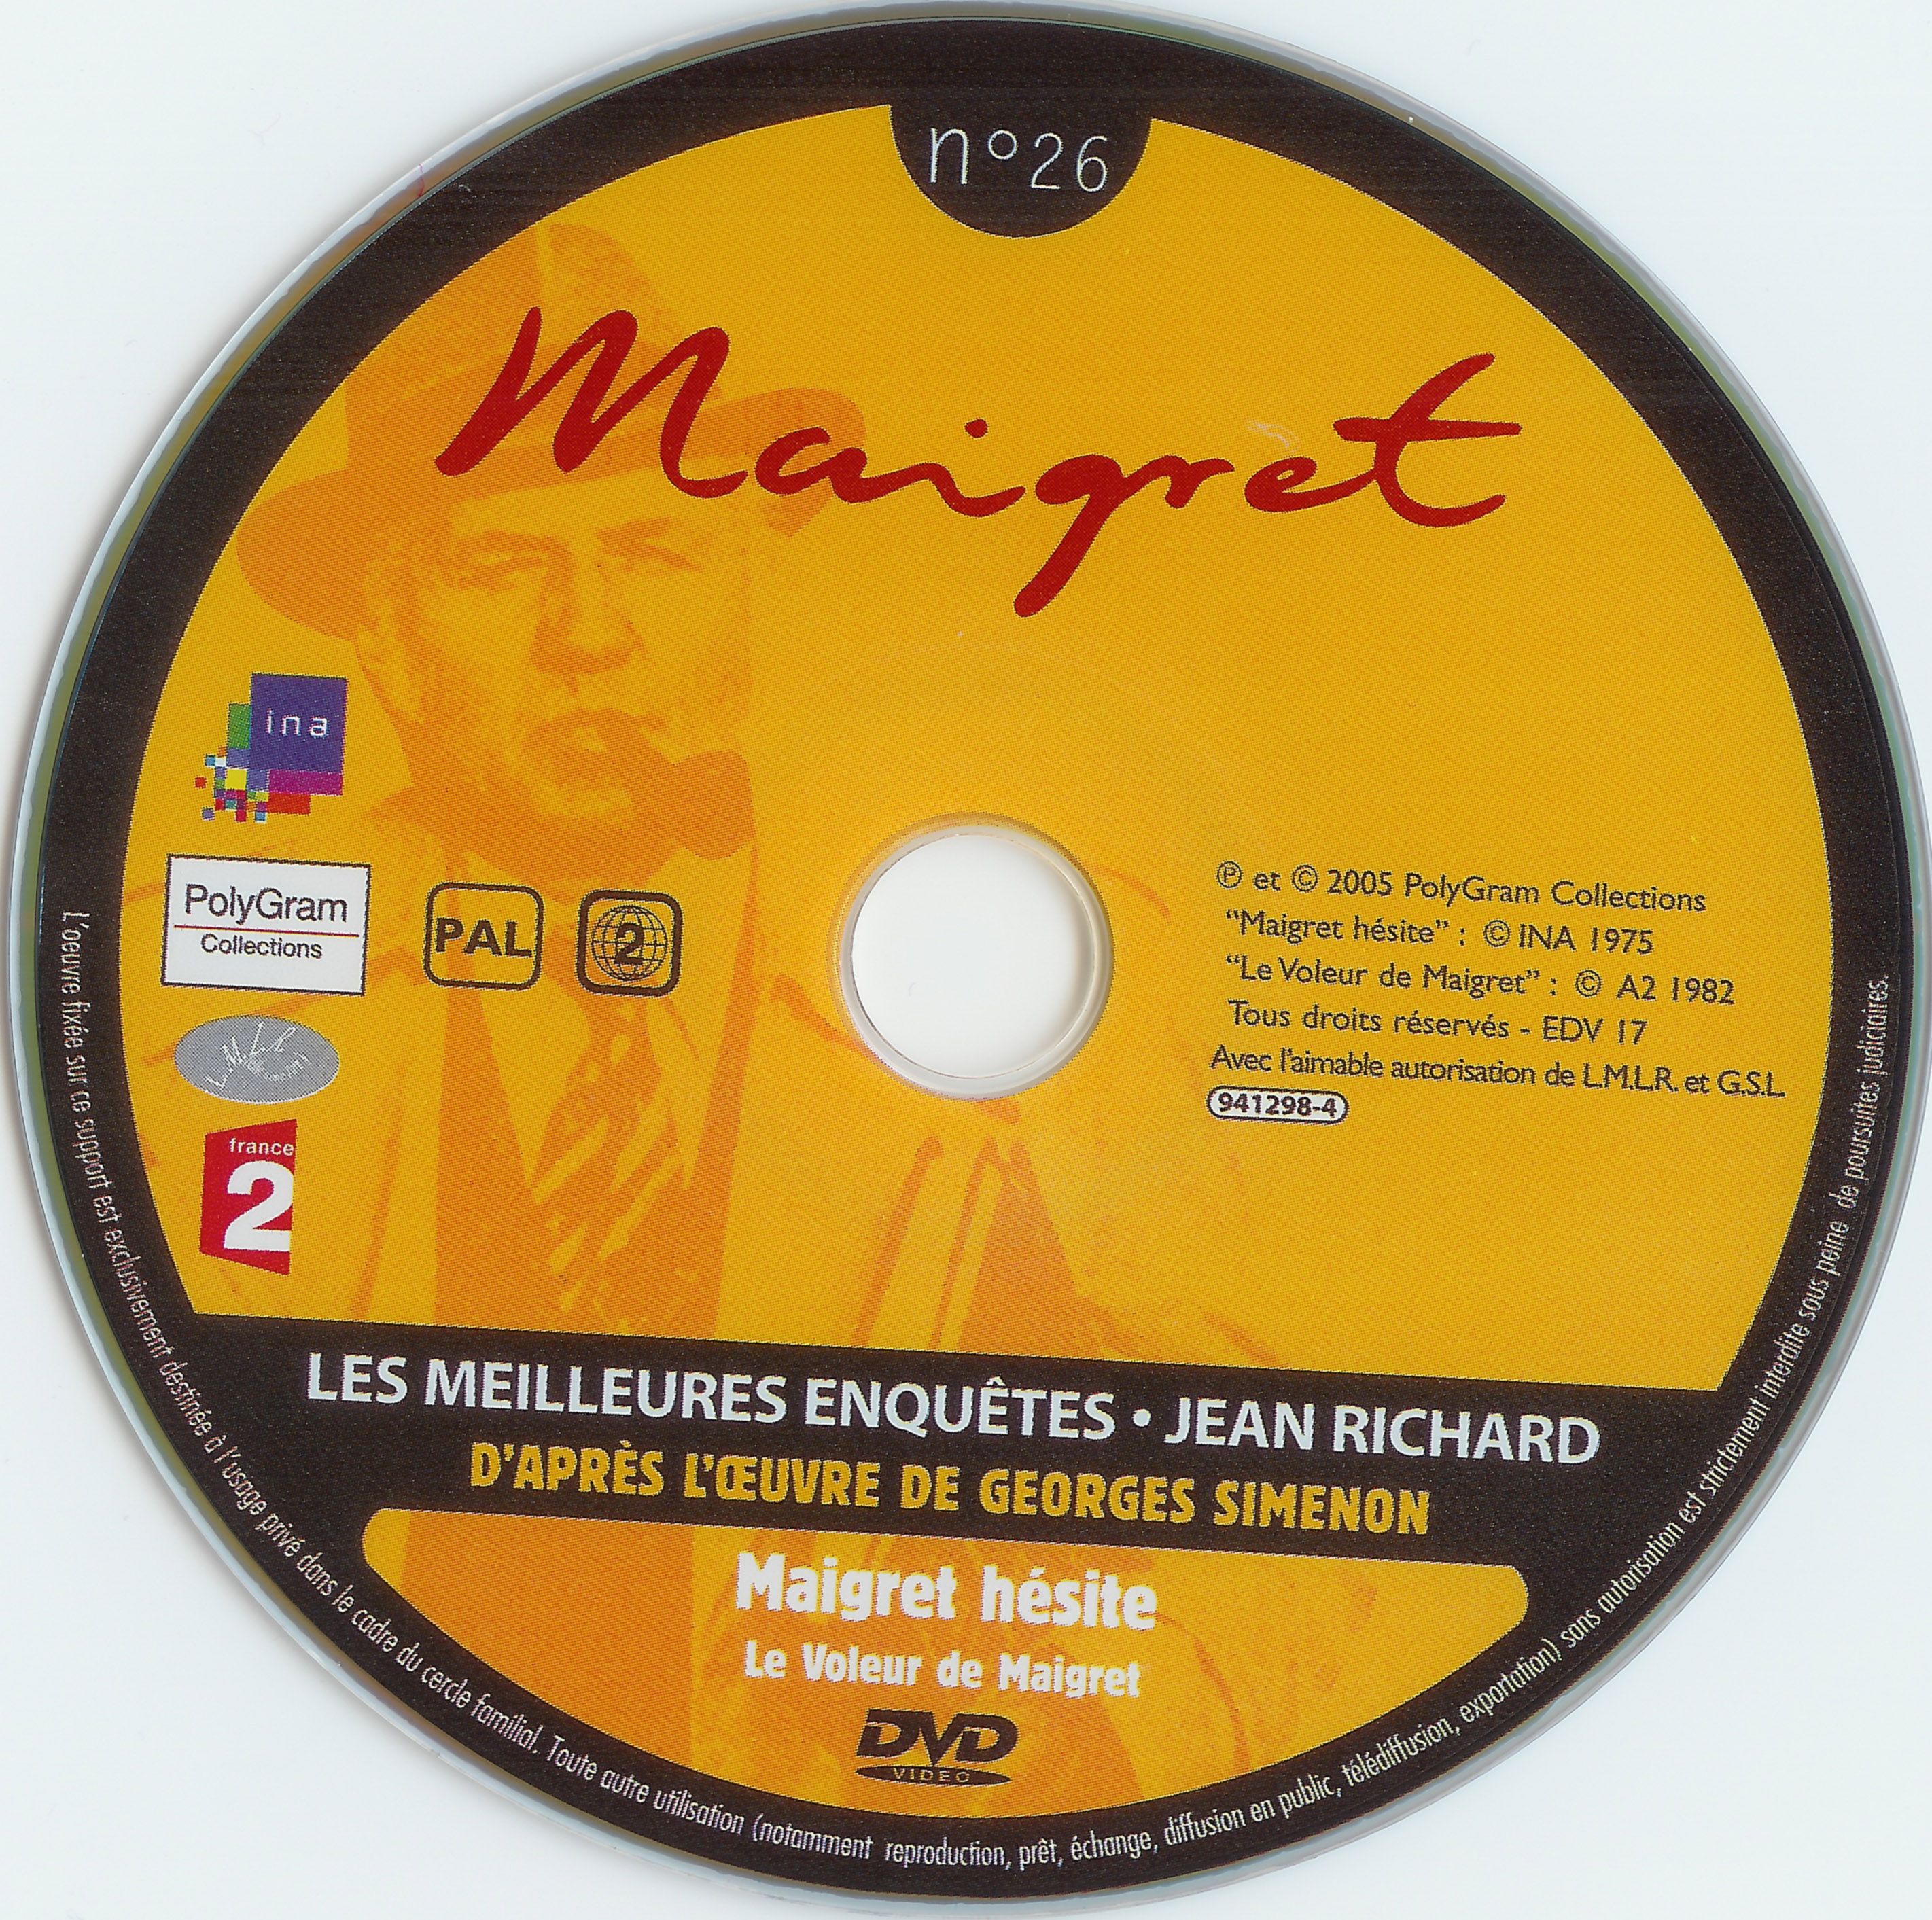 Maigret (Jean Richard) vol 26